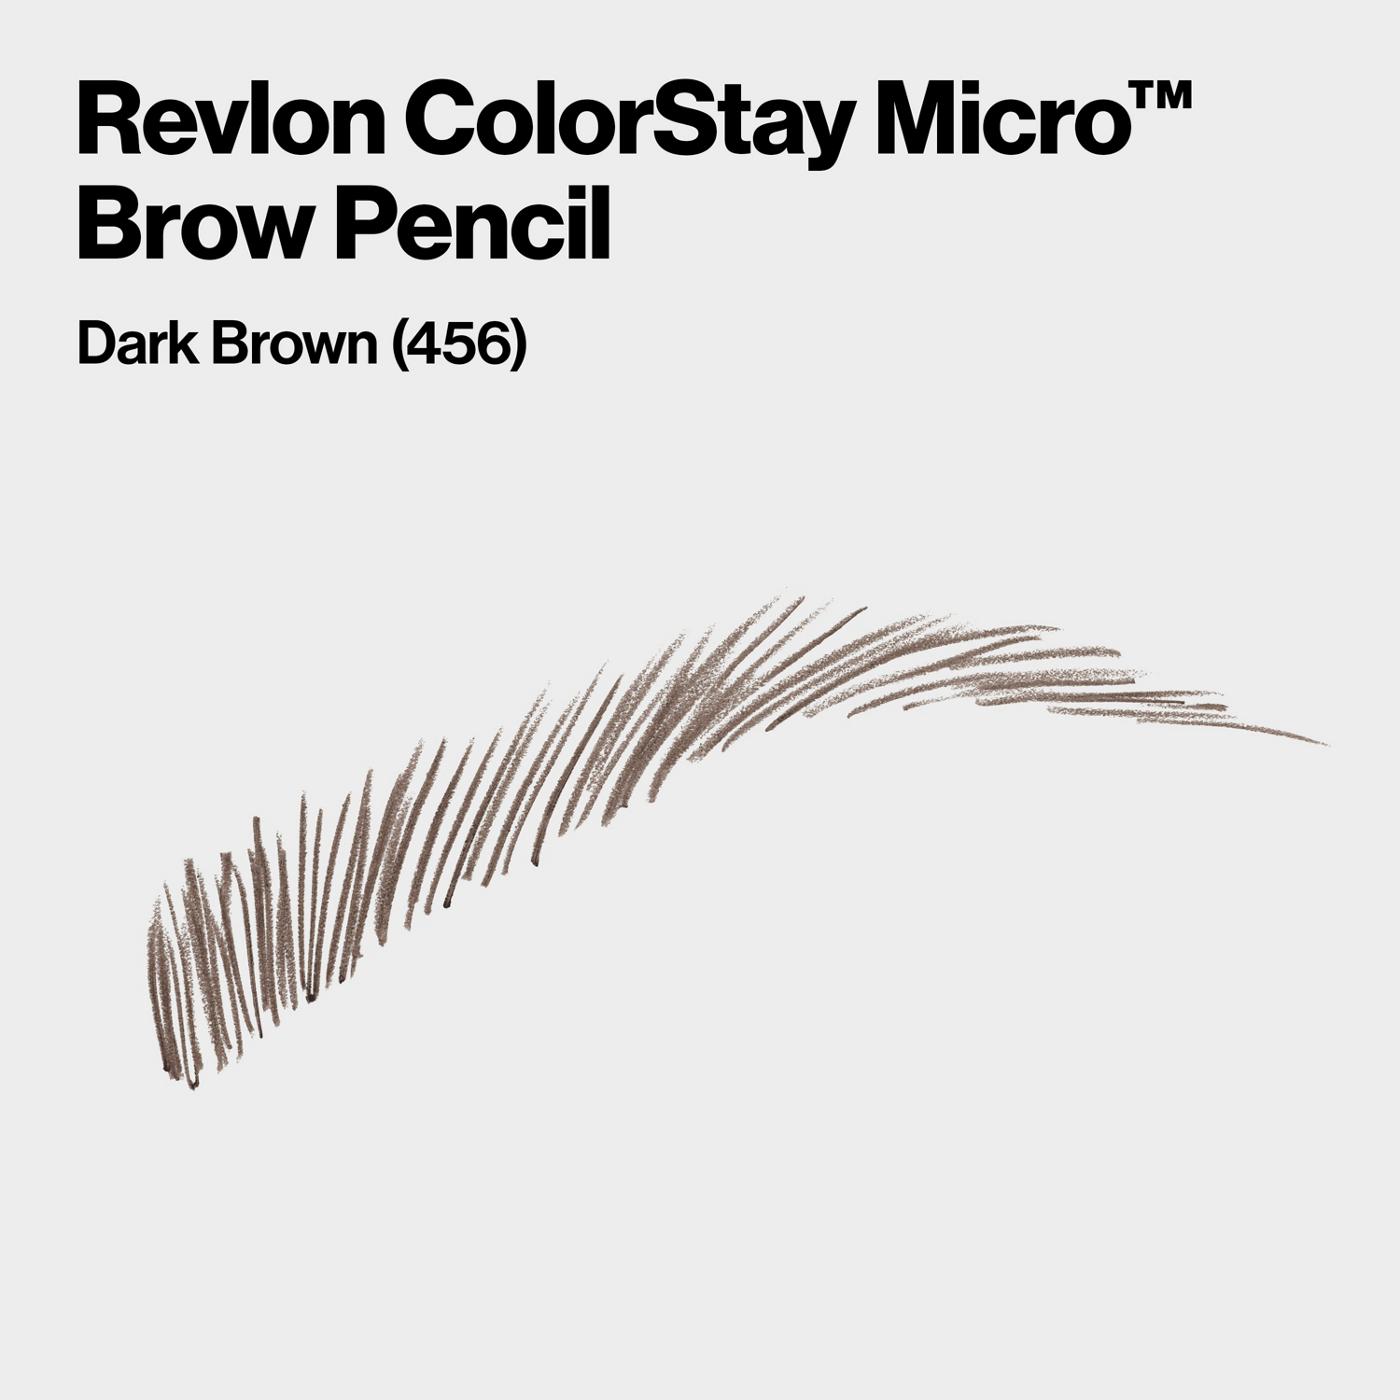 Revlon ColorStay Micro Brow Pencil - Dark Brown; image 2 of 9